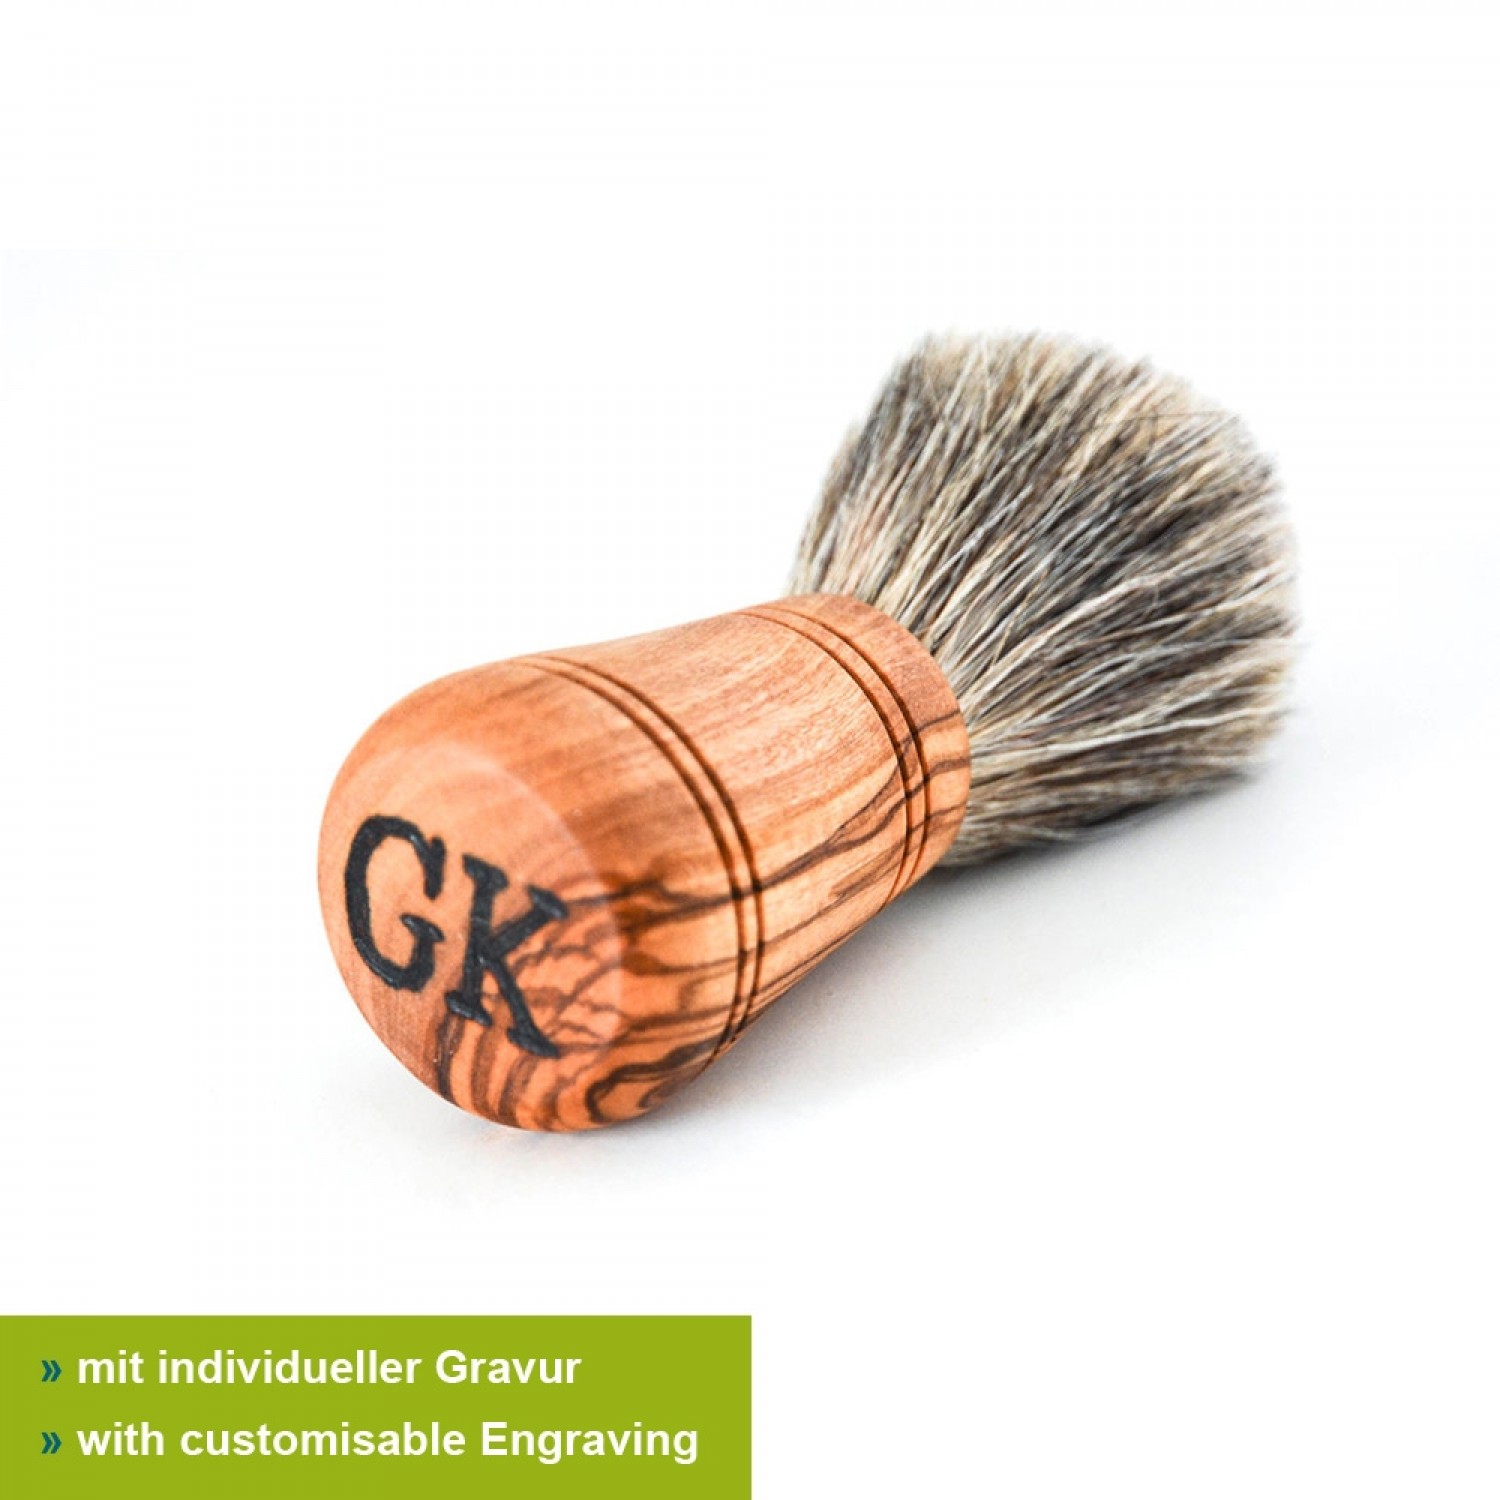 Rasierpinsel Sir George mit Olivenholz Griff & Gravur » D.O.M 